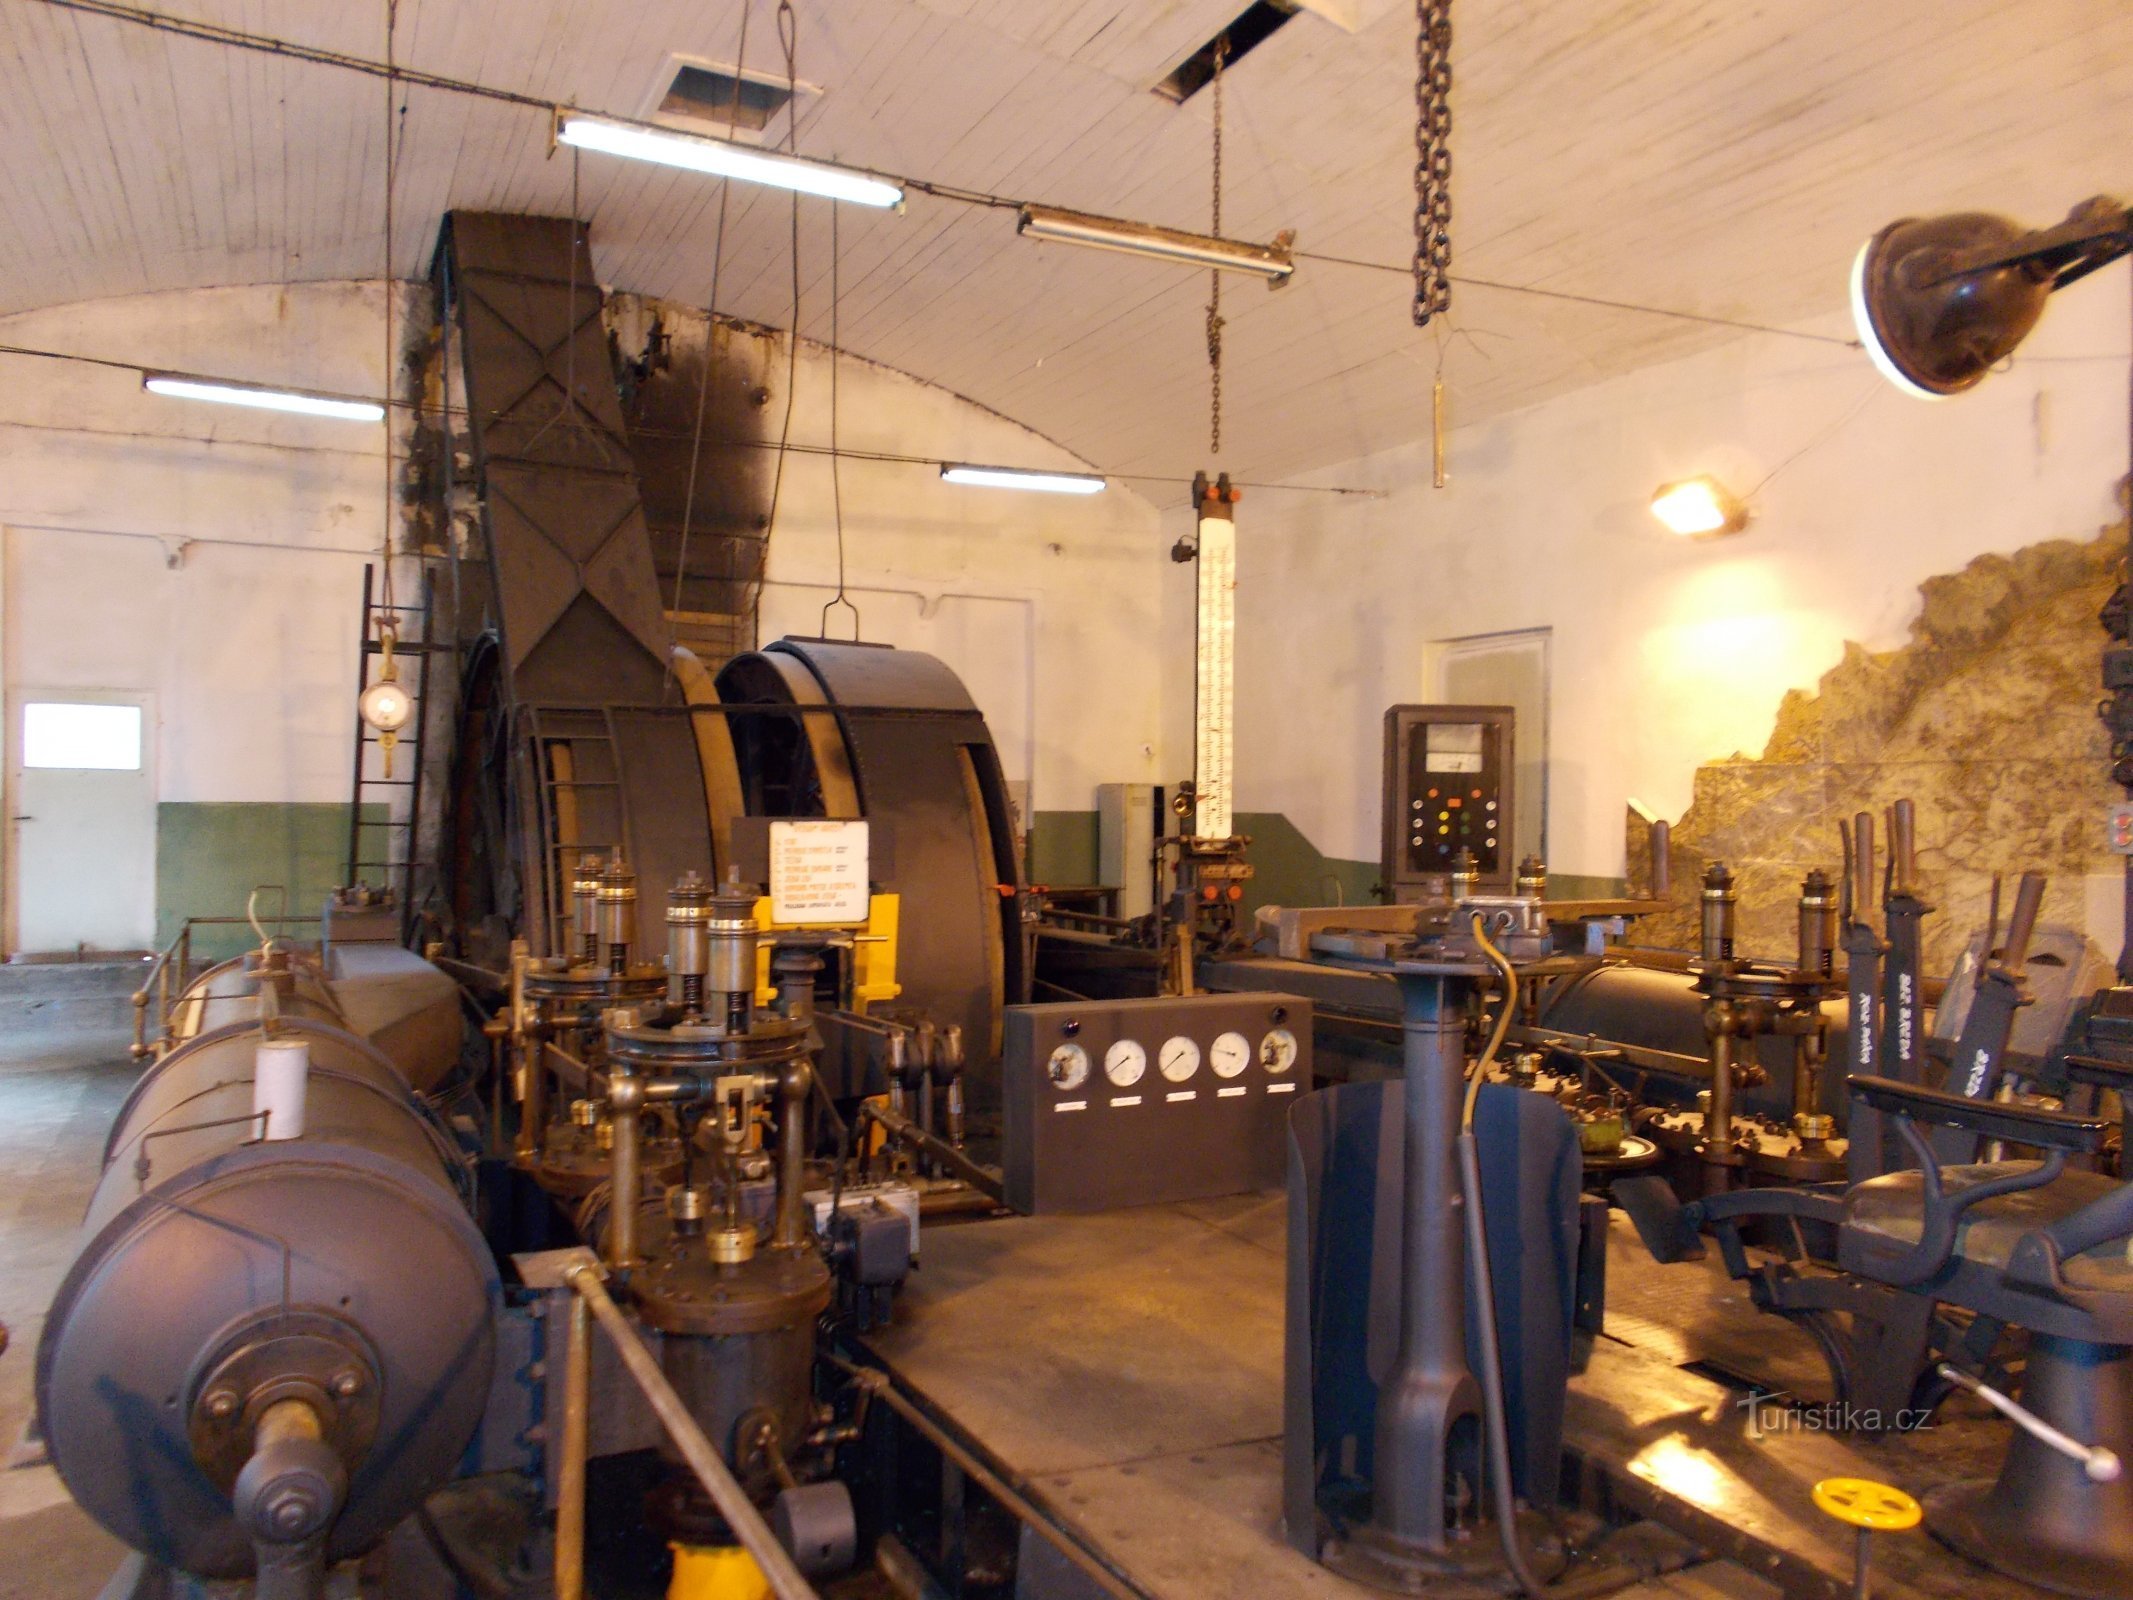 Podkrušnohorské technical museum - steam mining machine